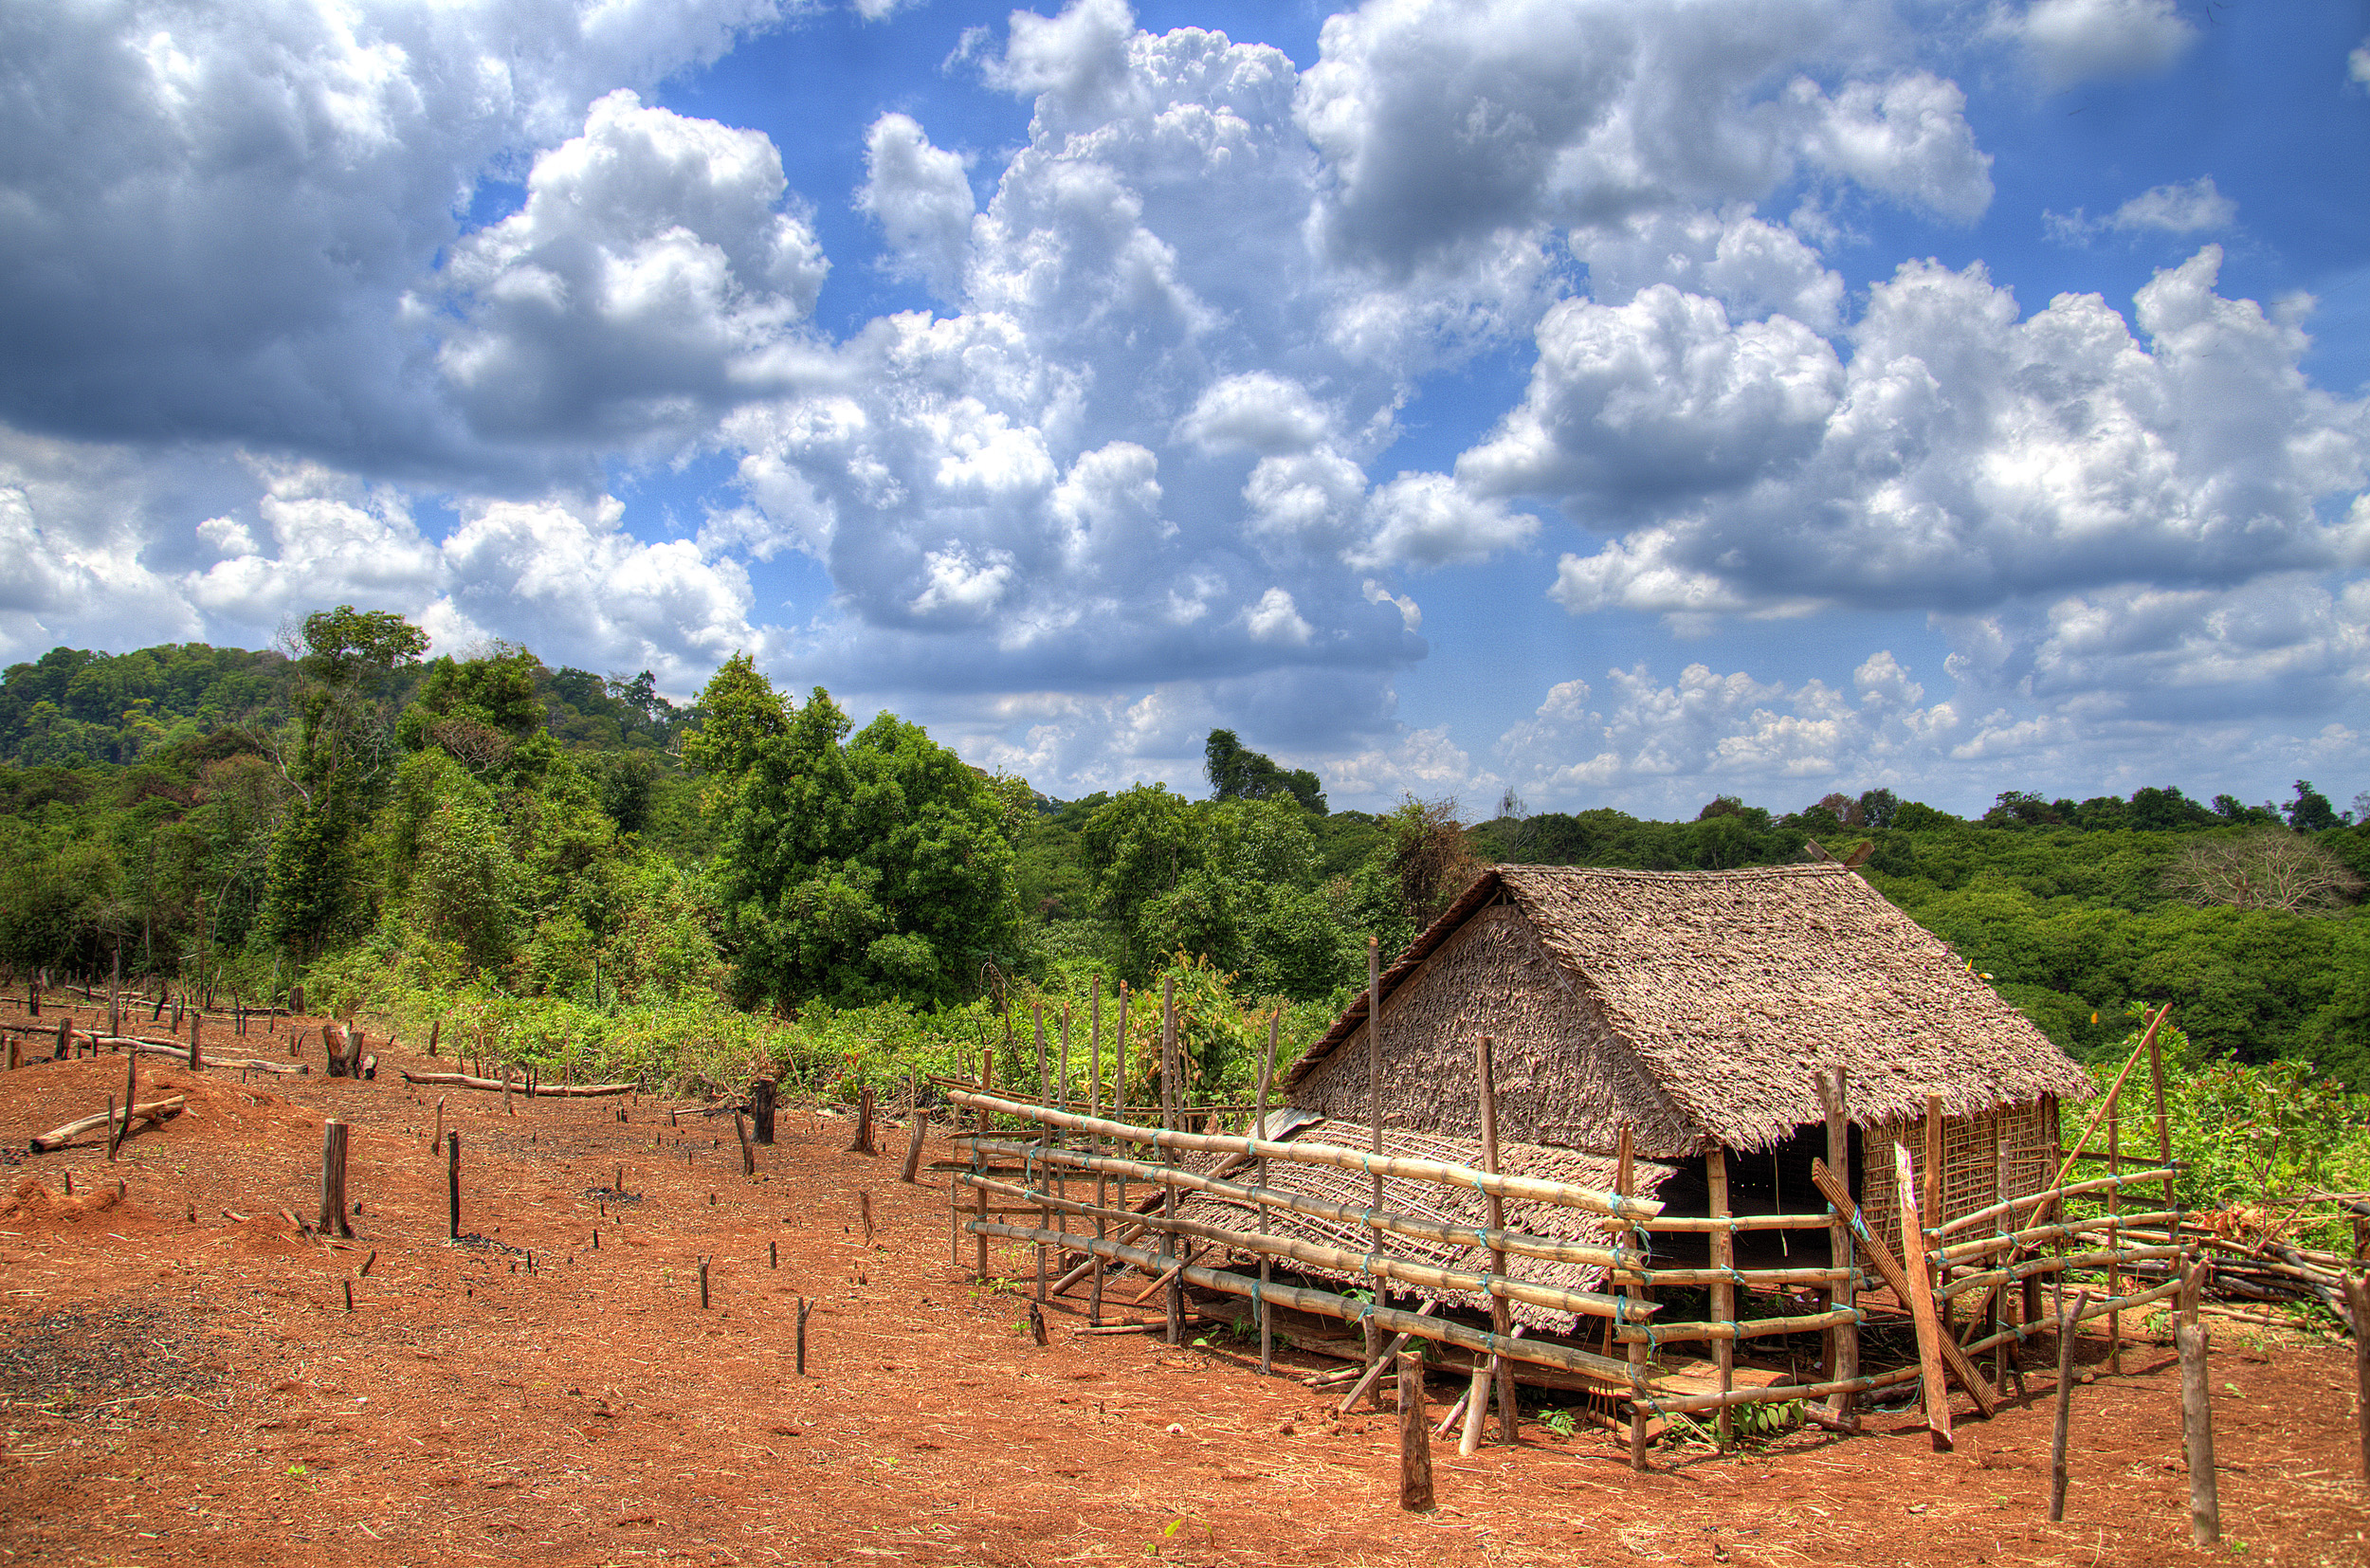 Tribal Farm House in Cambodia